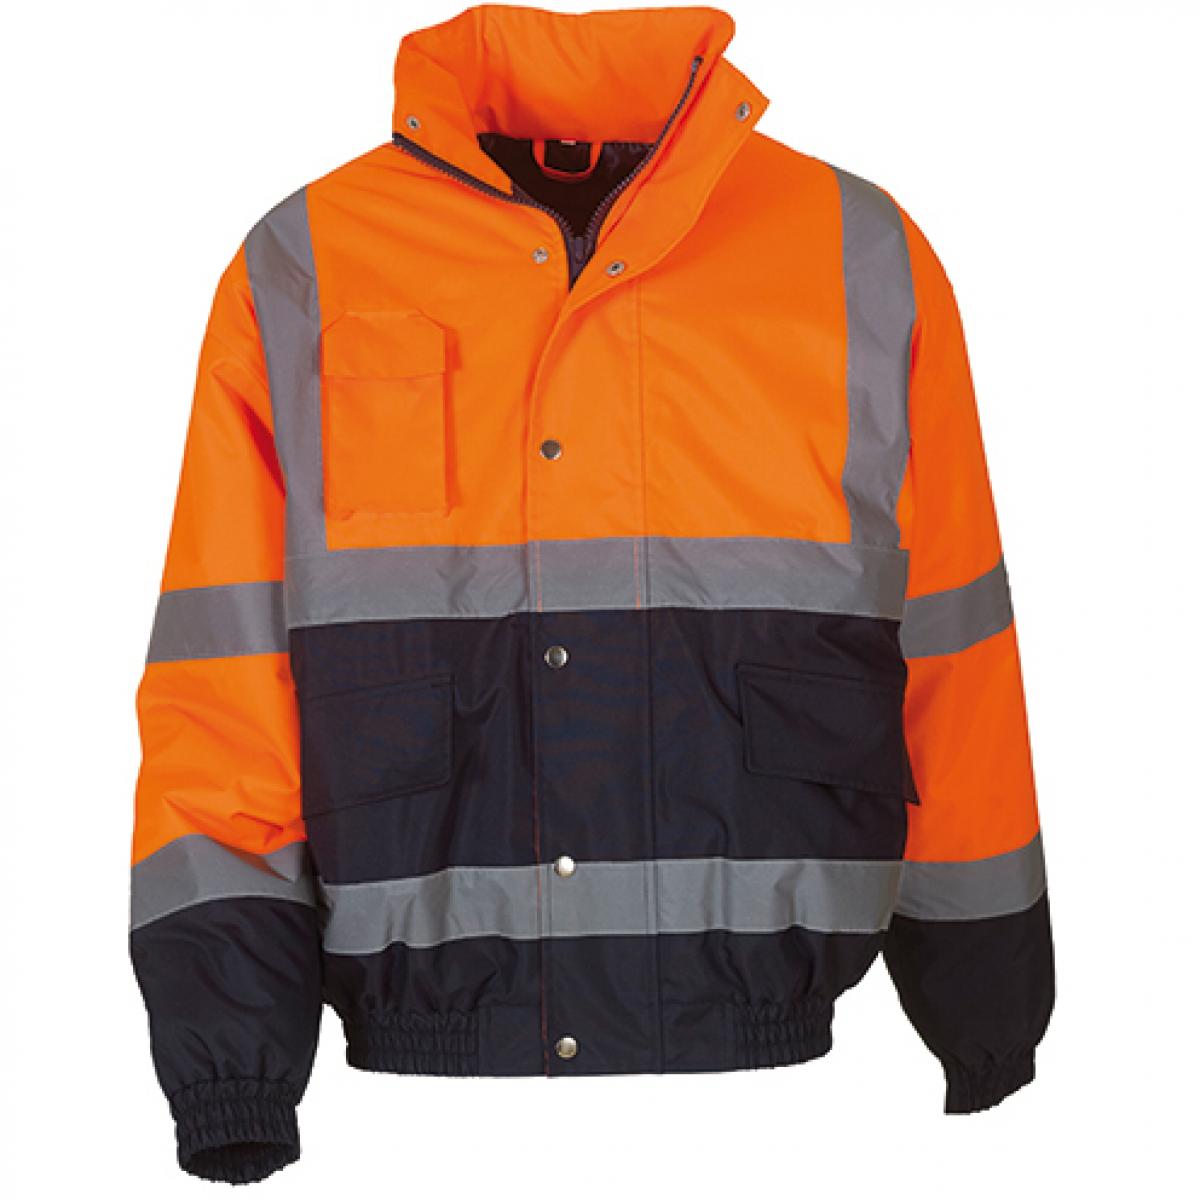 Hersteller: YOKO Herstellernummer: HVP218 Artikelbezeichnung: High Visibility Two-Tone Jacke | EN ISO 471:2013 Klasse 3 Farbe: Hi-Vis Orange/Navy